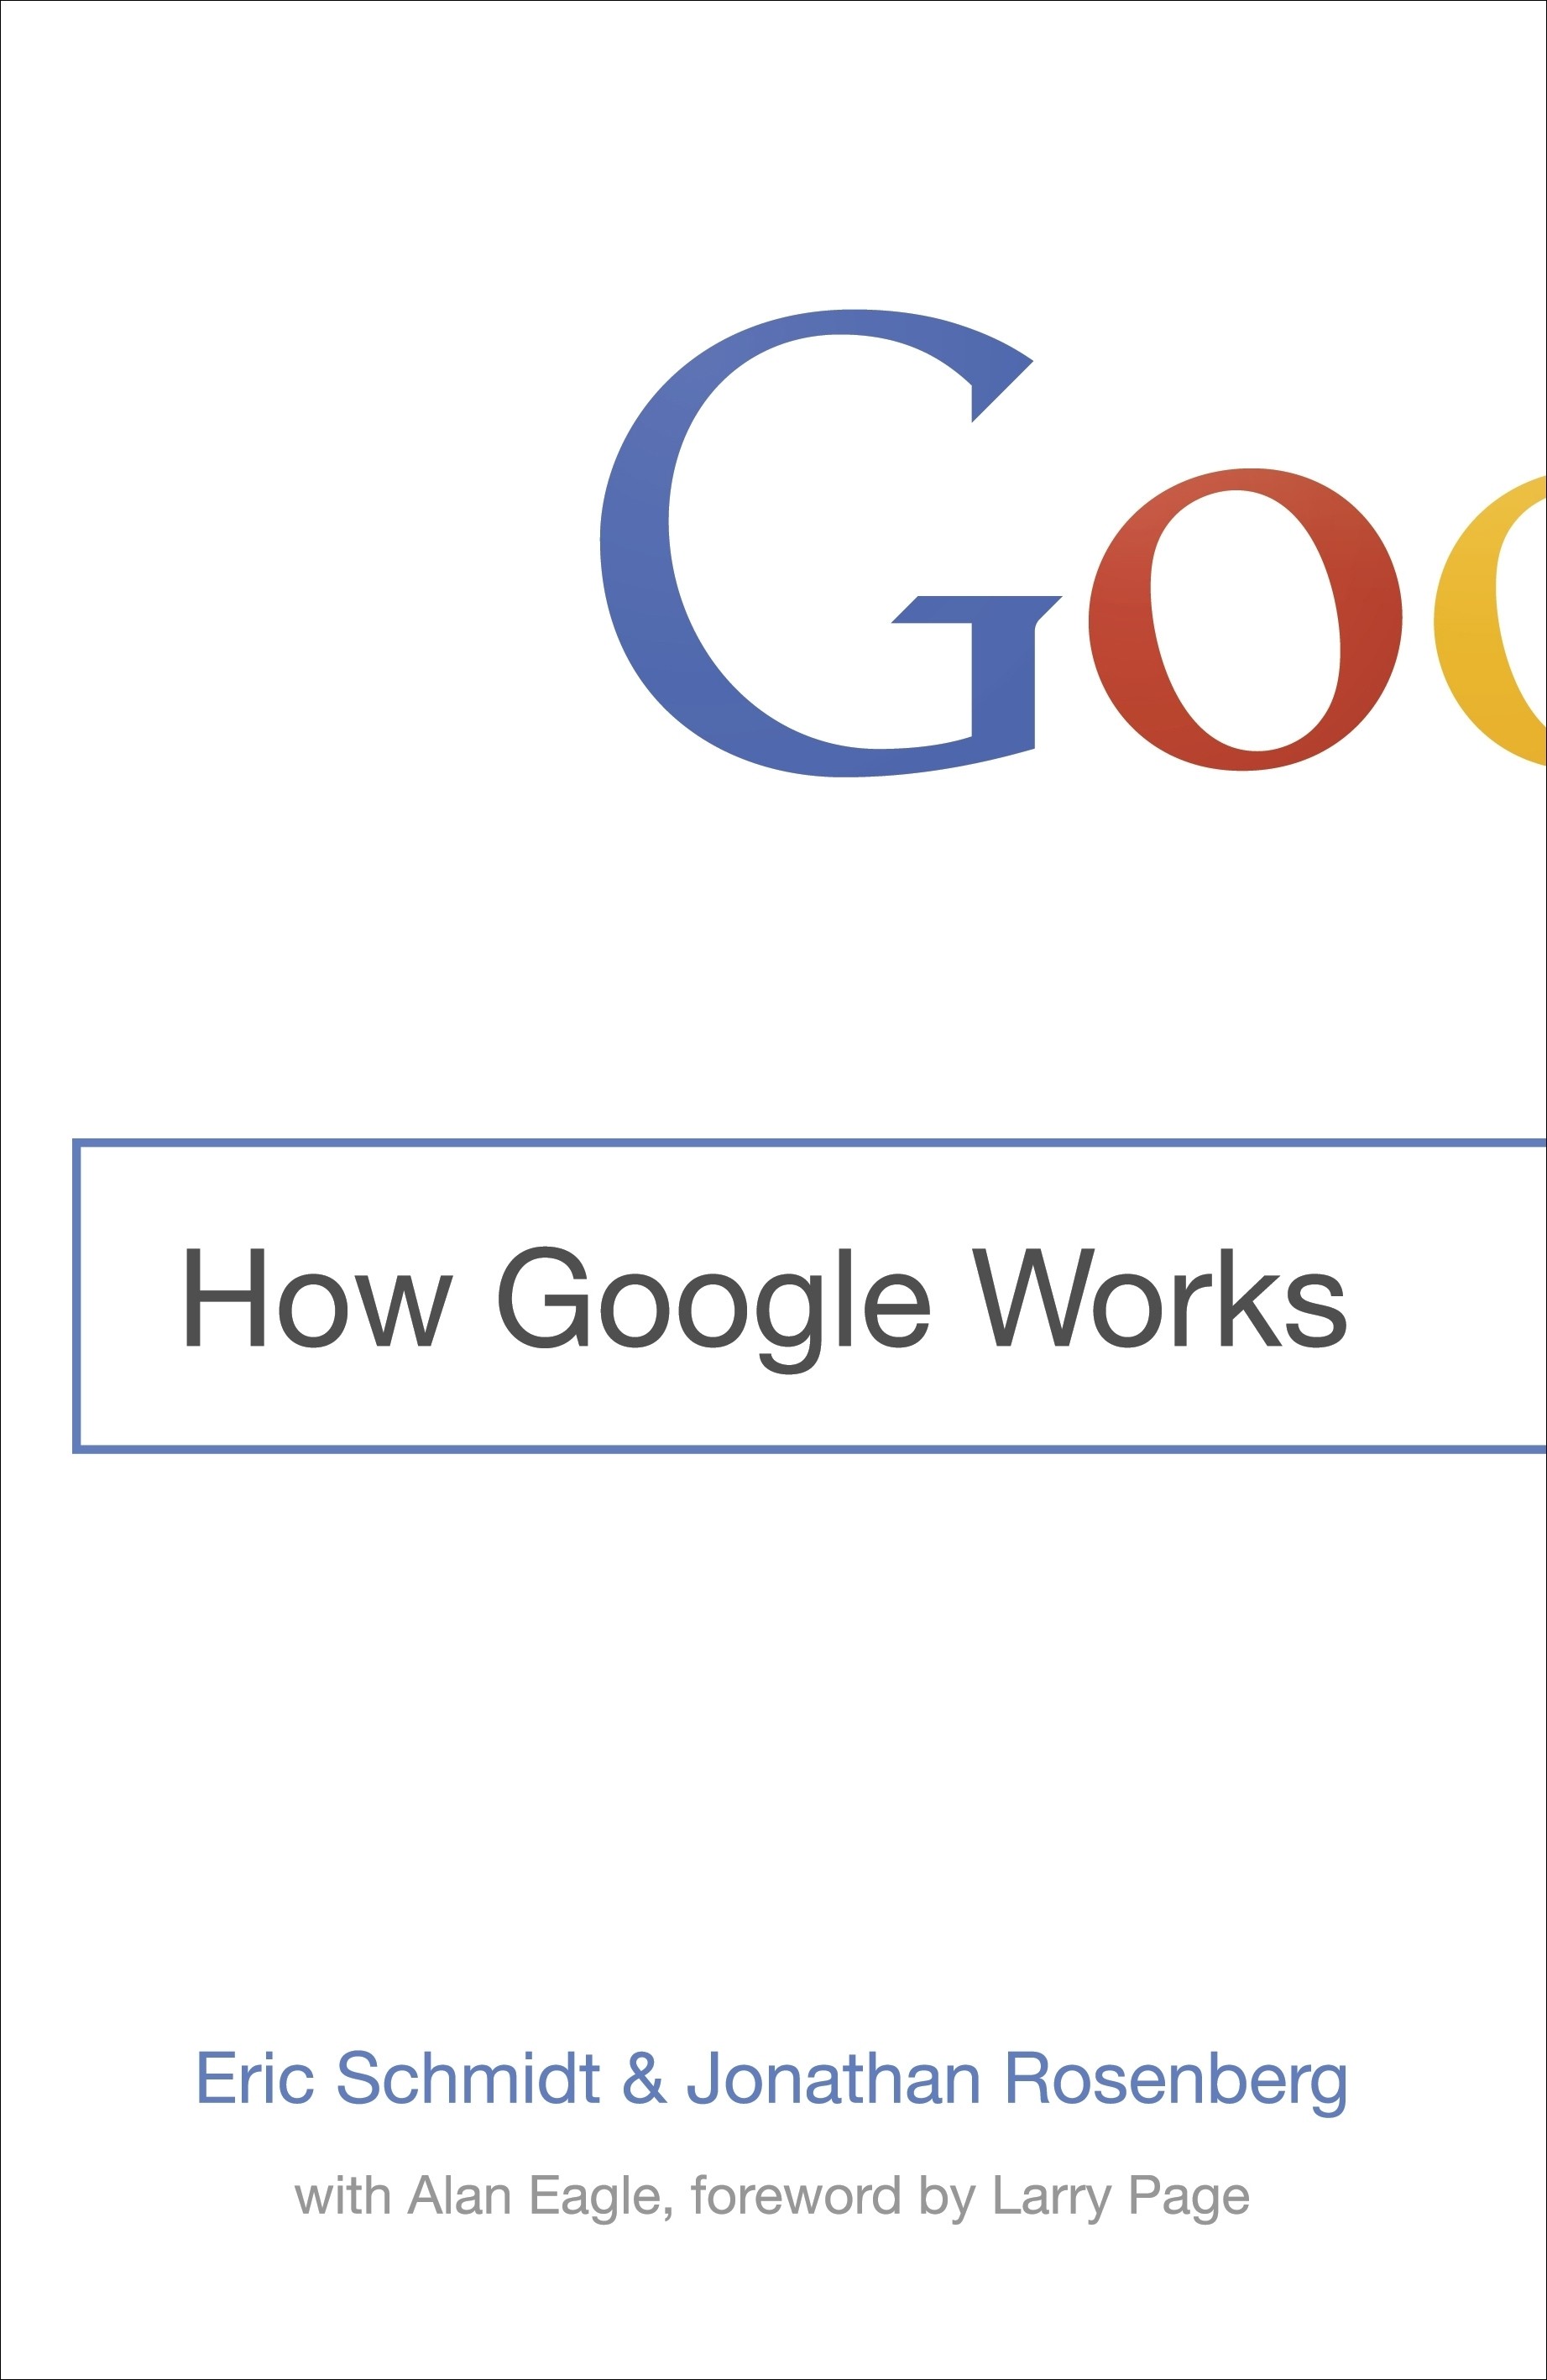 How Google Works.jpeg